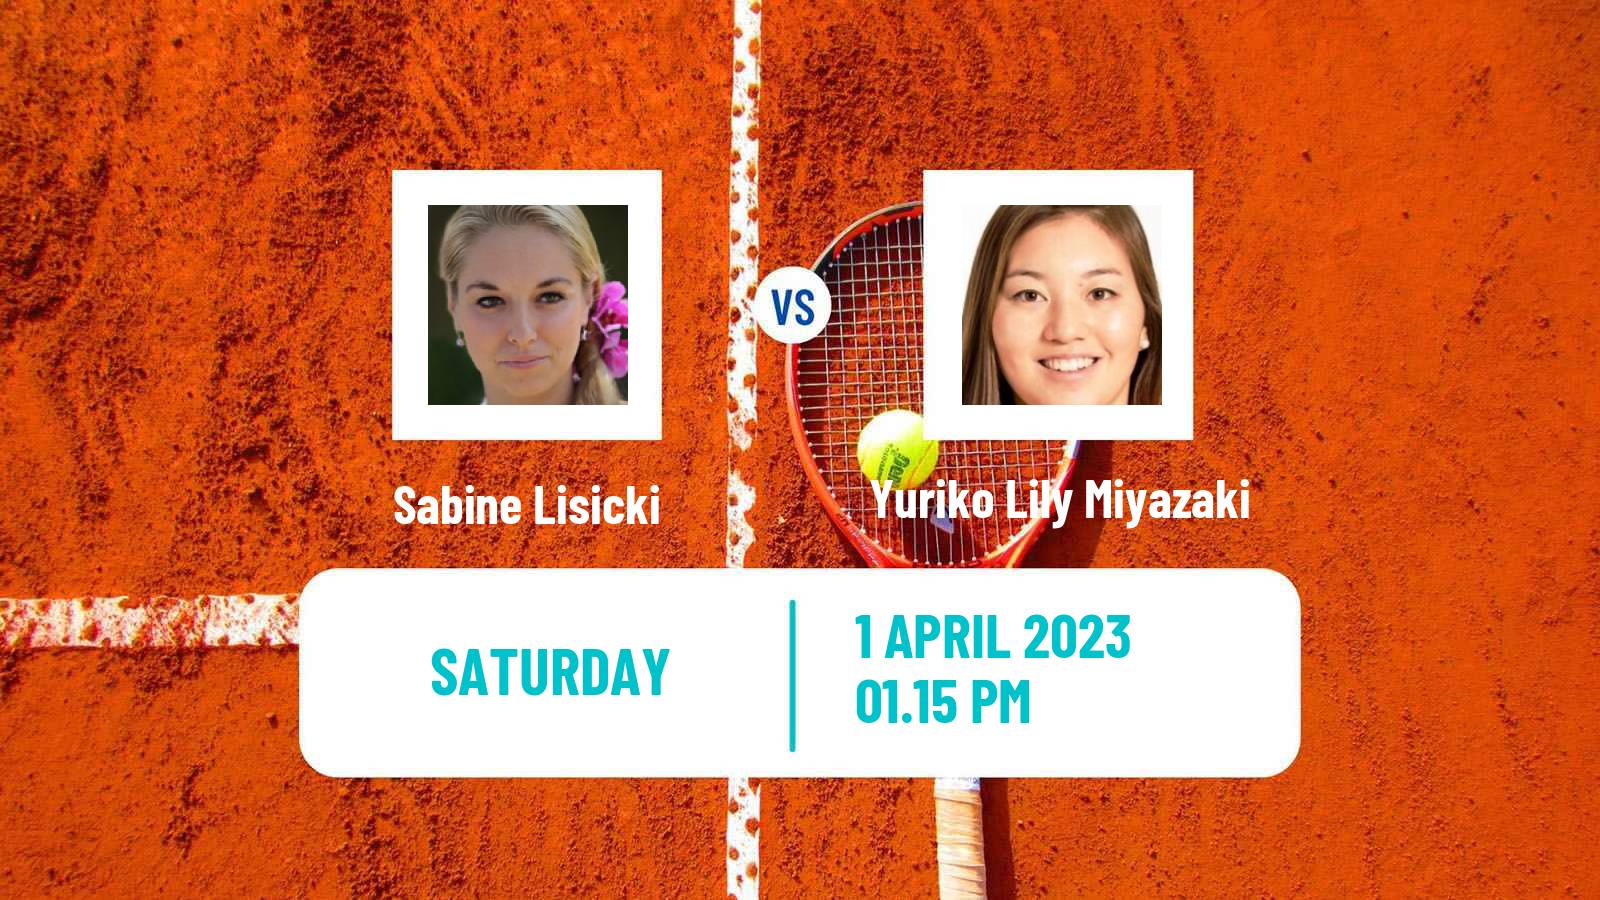 Tennis WTA Charleston Sabine Lisicki - Yuriko Lily Miyazaki